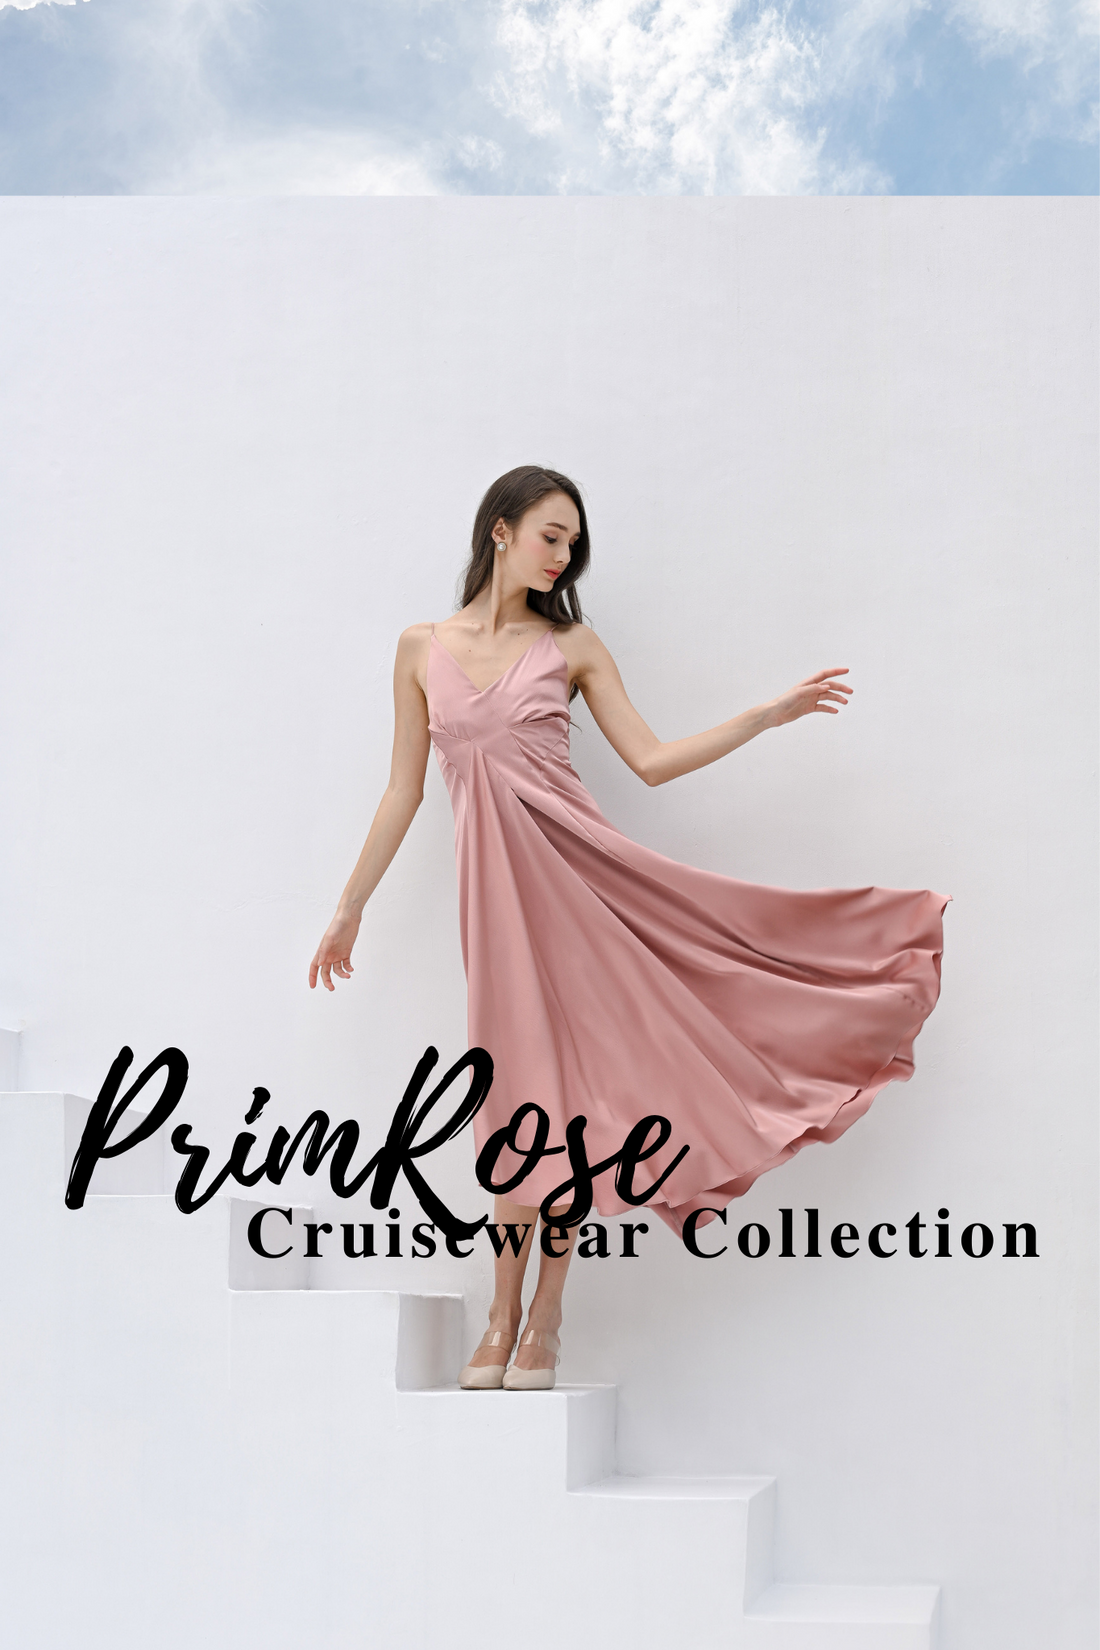  Primrose - Cruise Wear